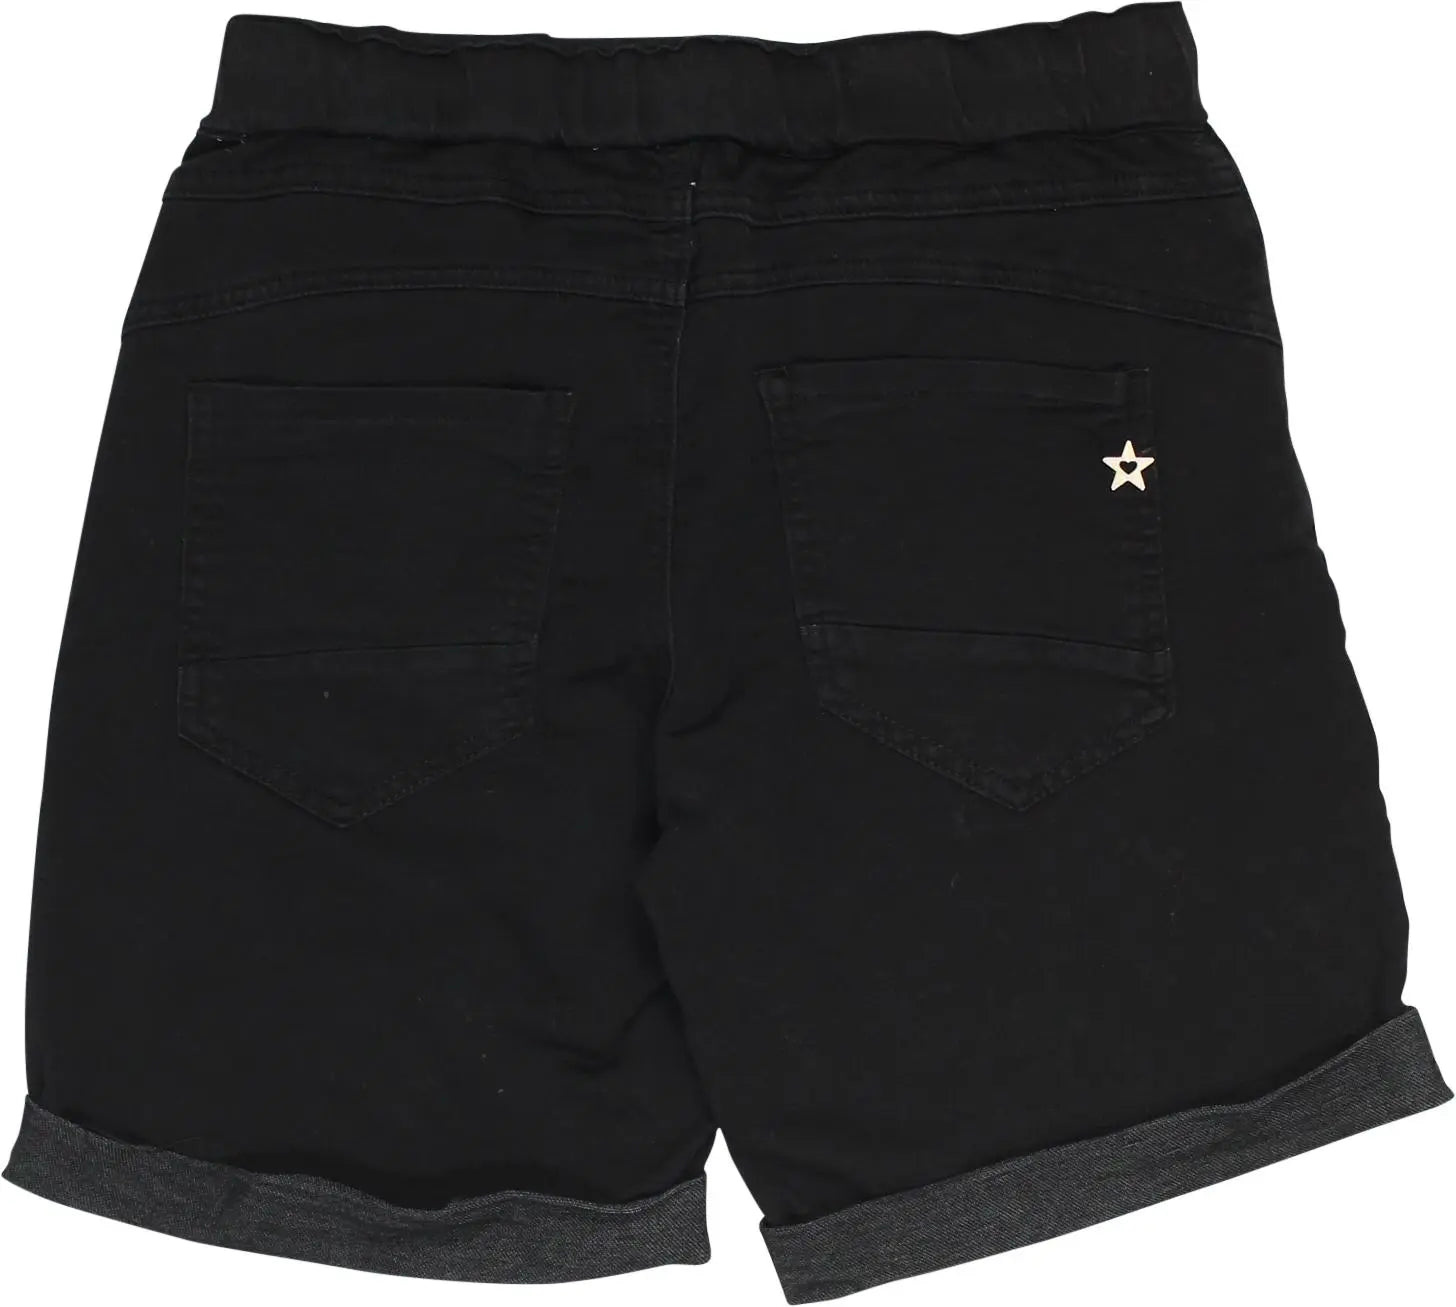 Karostar - Shorts- ThriftTale.com - Vintage and second handclothing